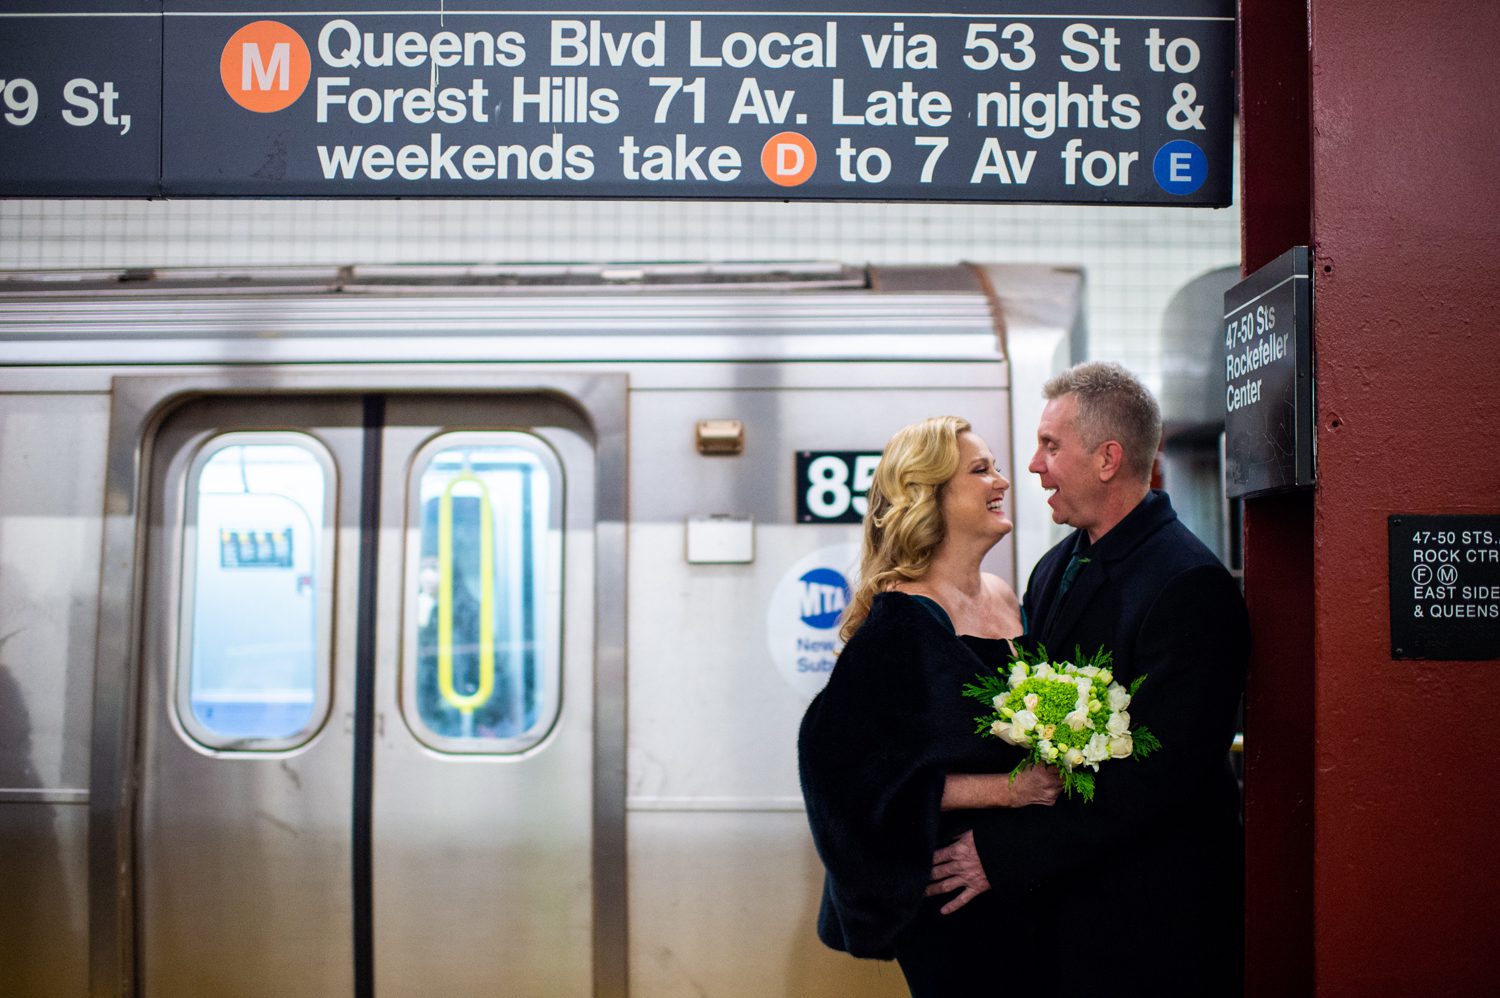 Wedding Photos on the Subway